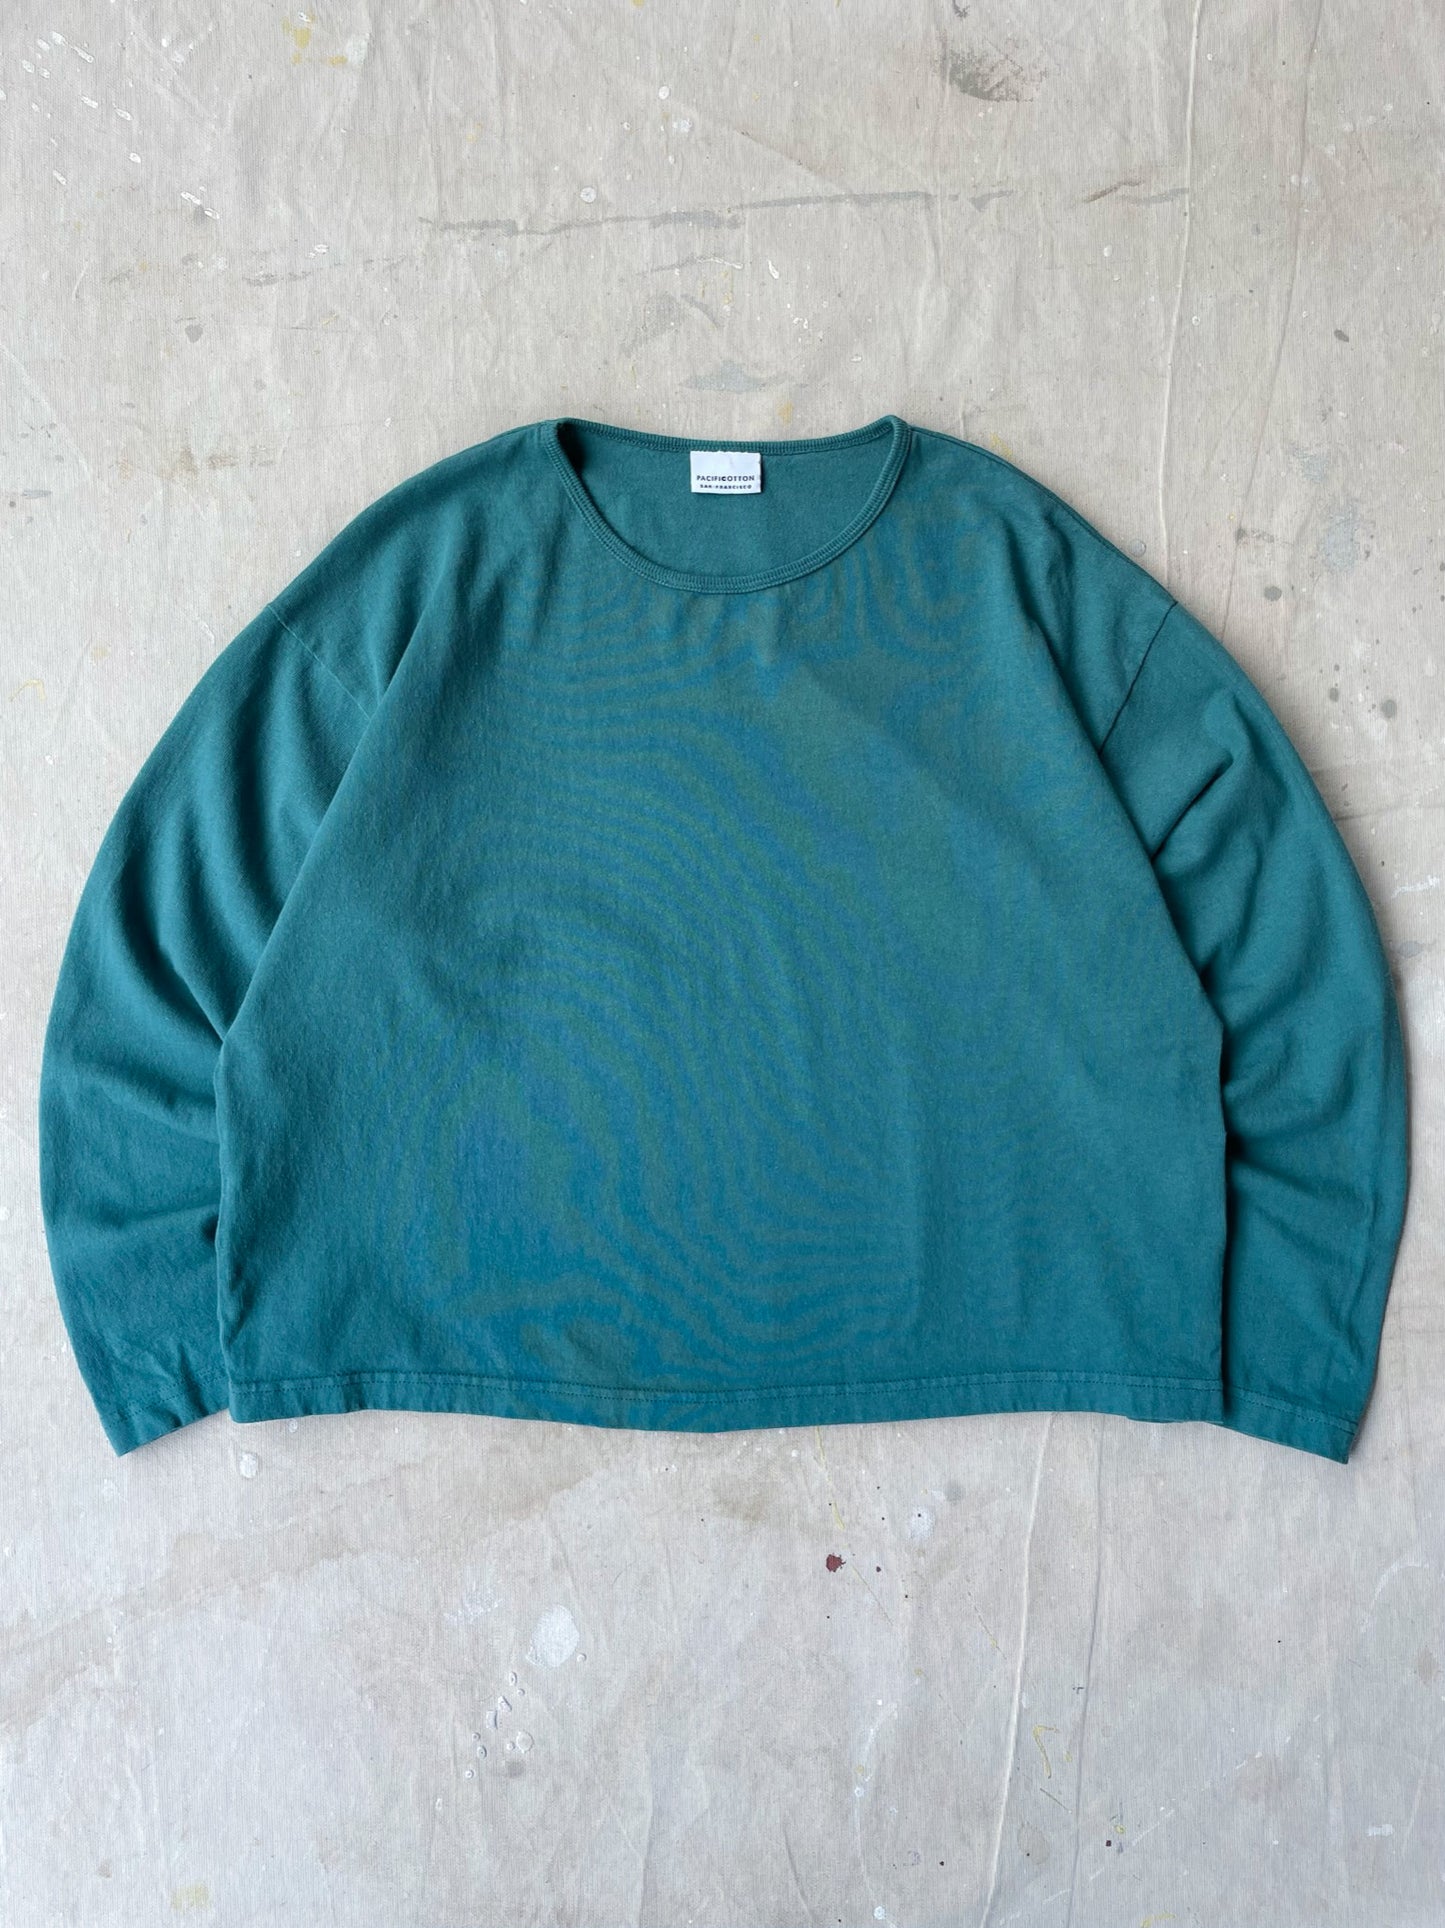 Cotton Long Sleeve Shirt—[M/L]